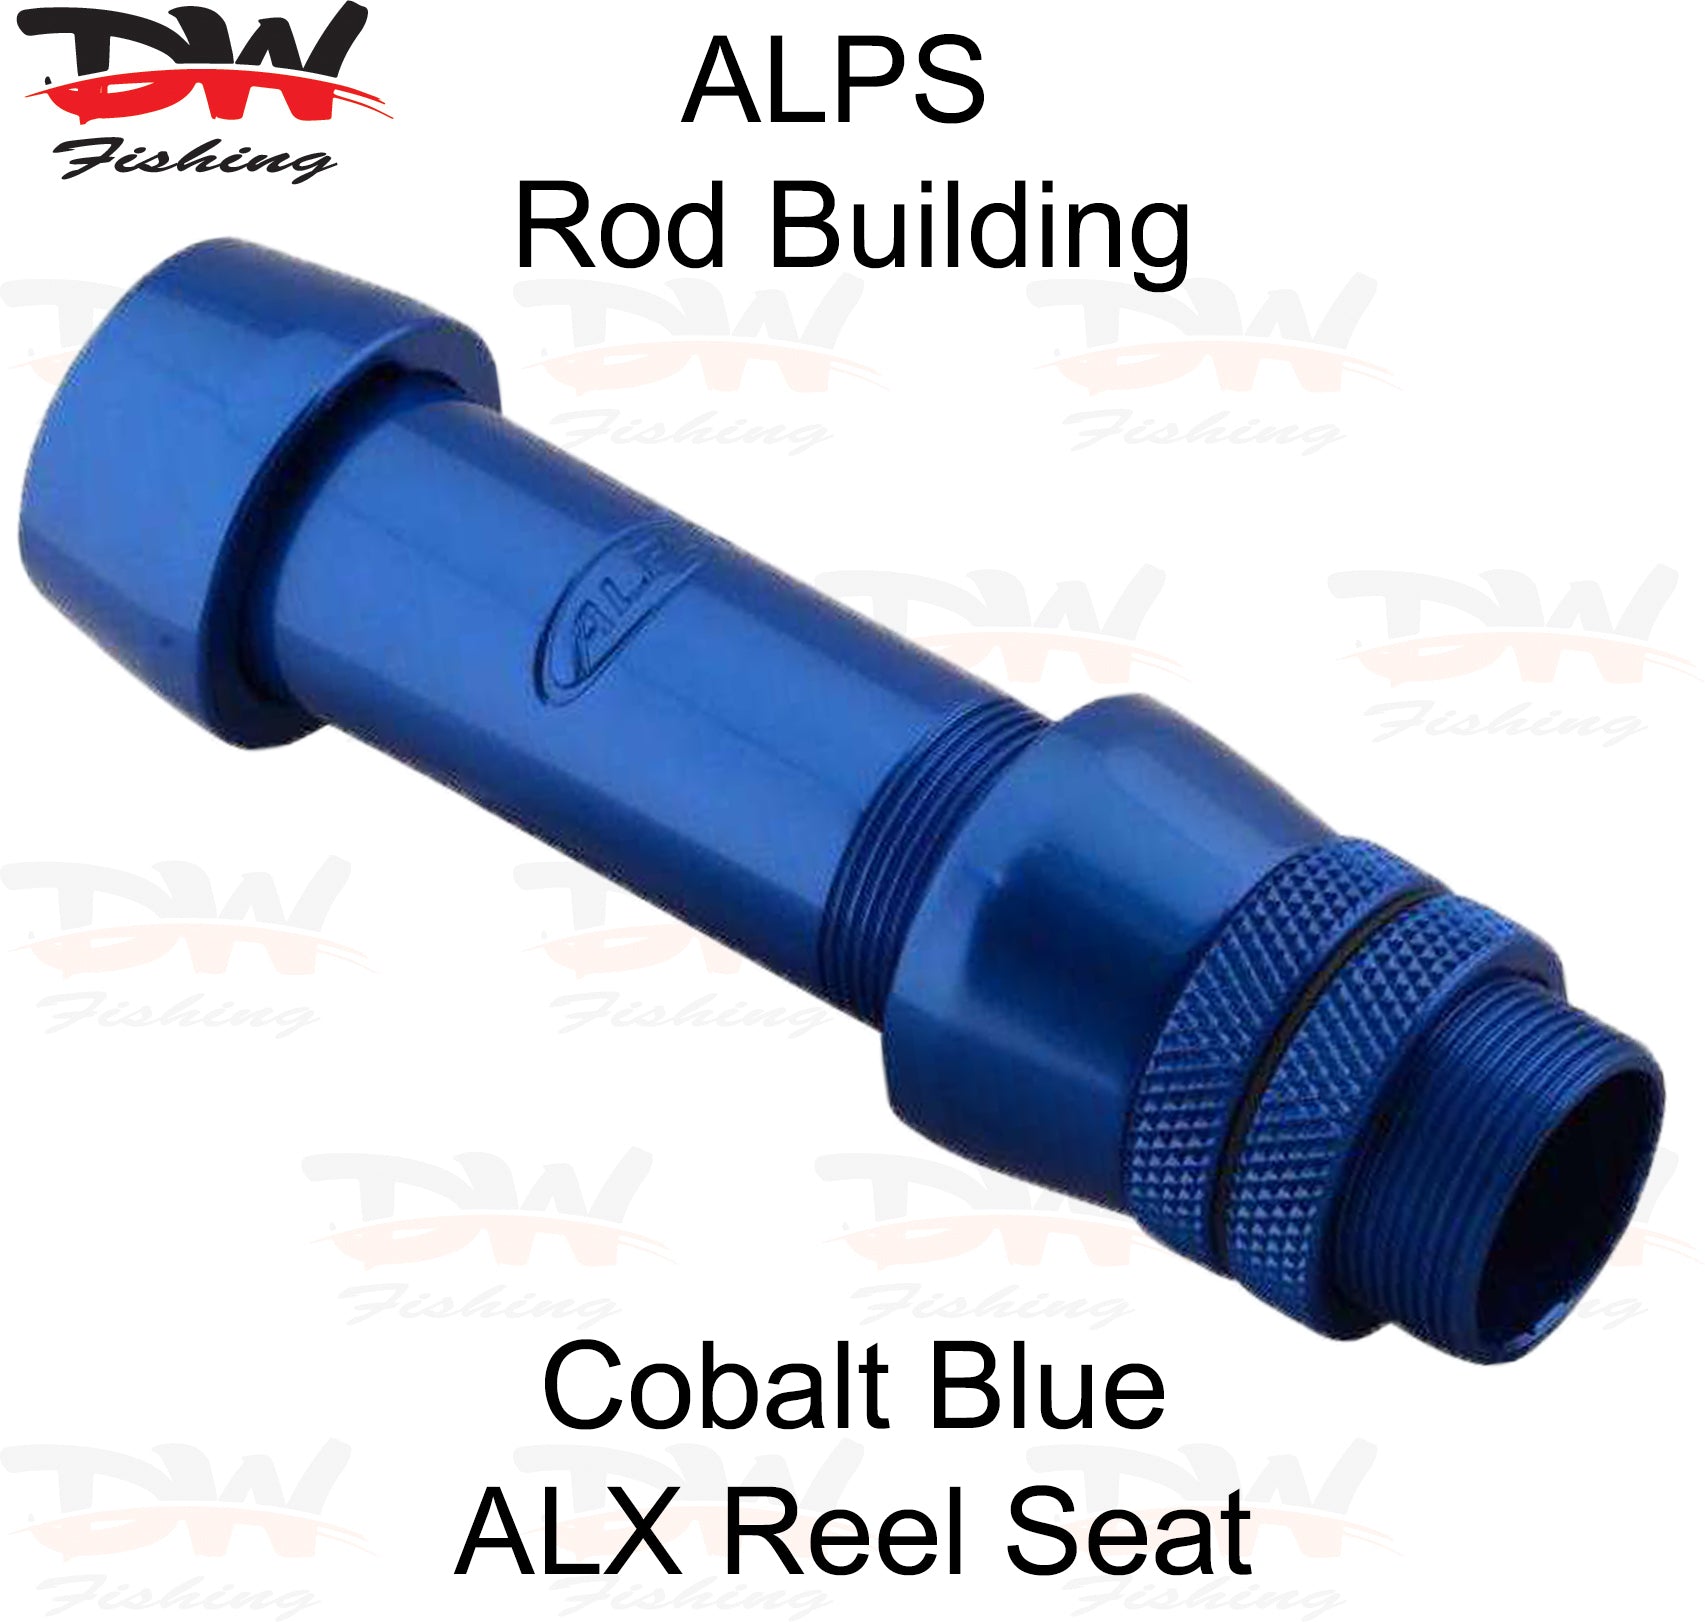 ALPS ALX Alloy Reel seat cobalt blue colour salt water reel seat